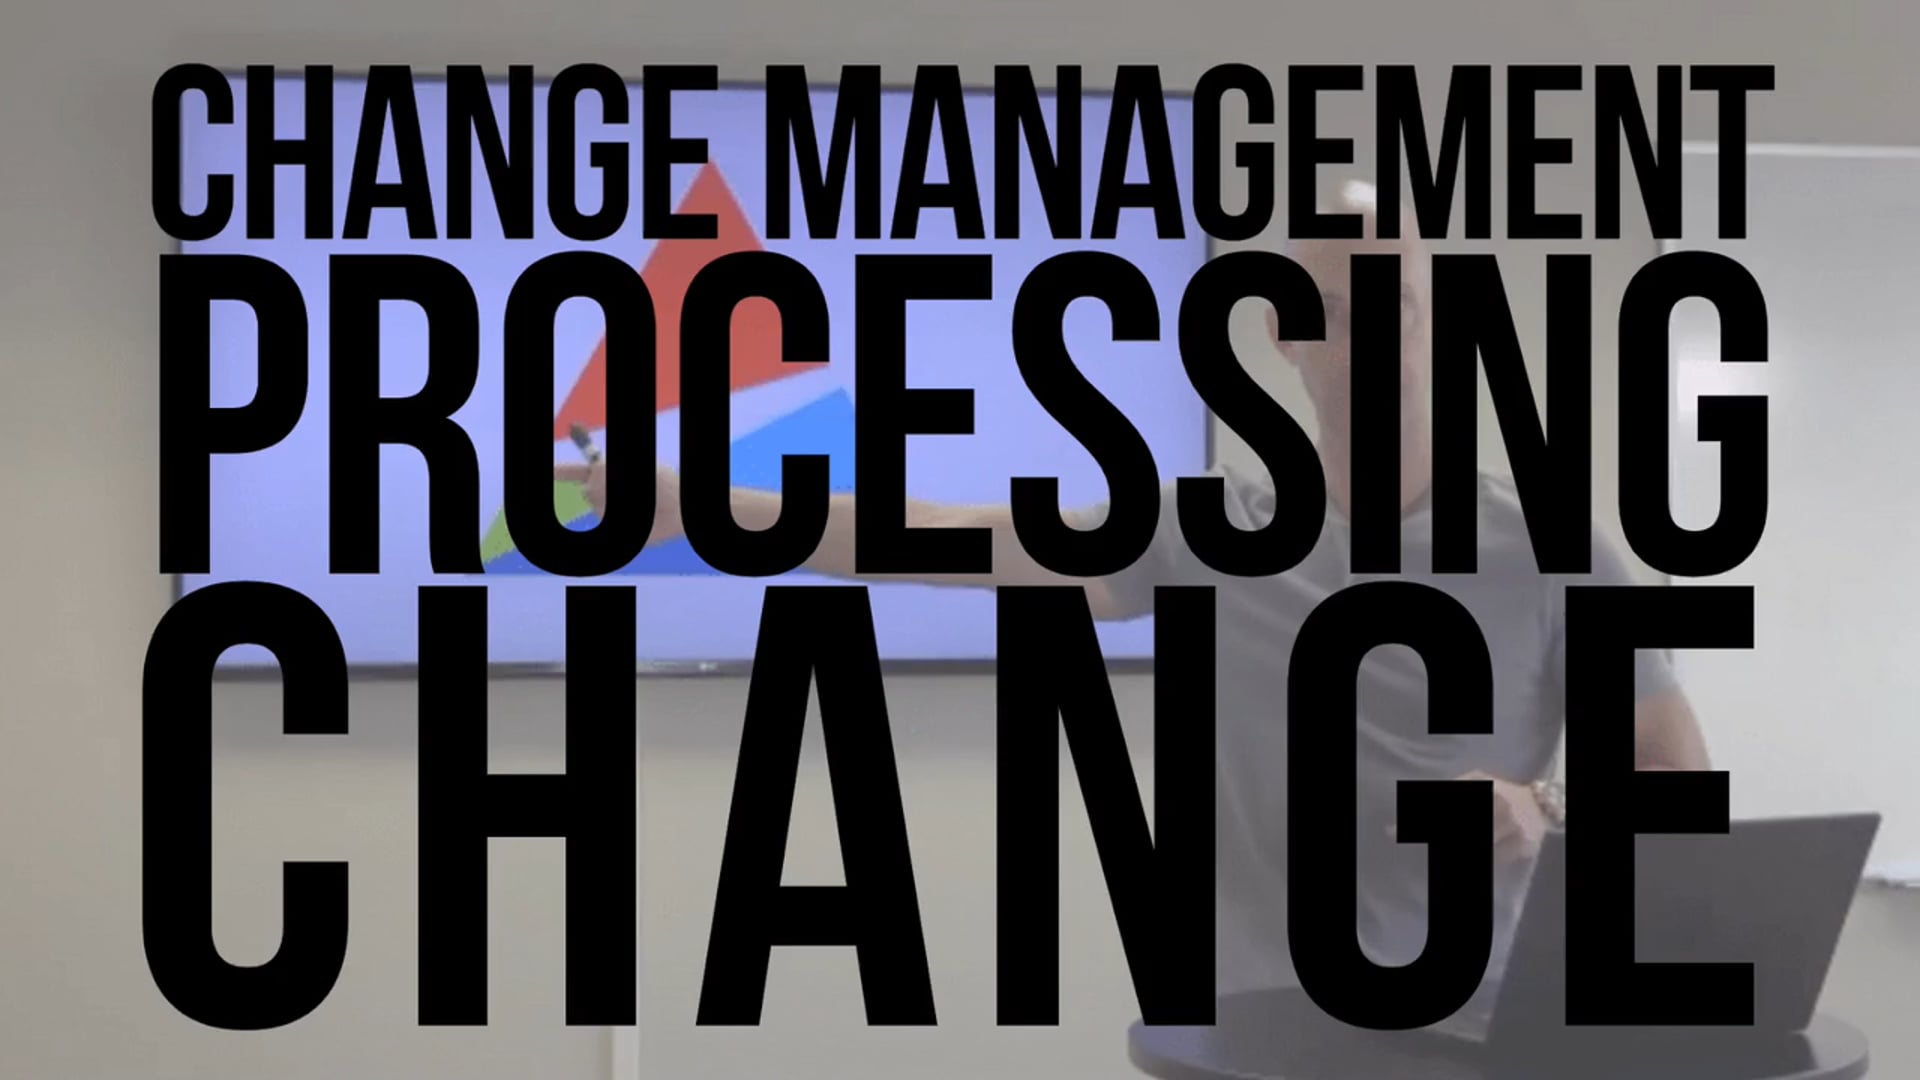 Change Management Processing Change